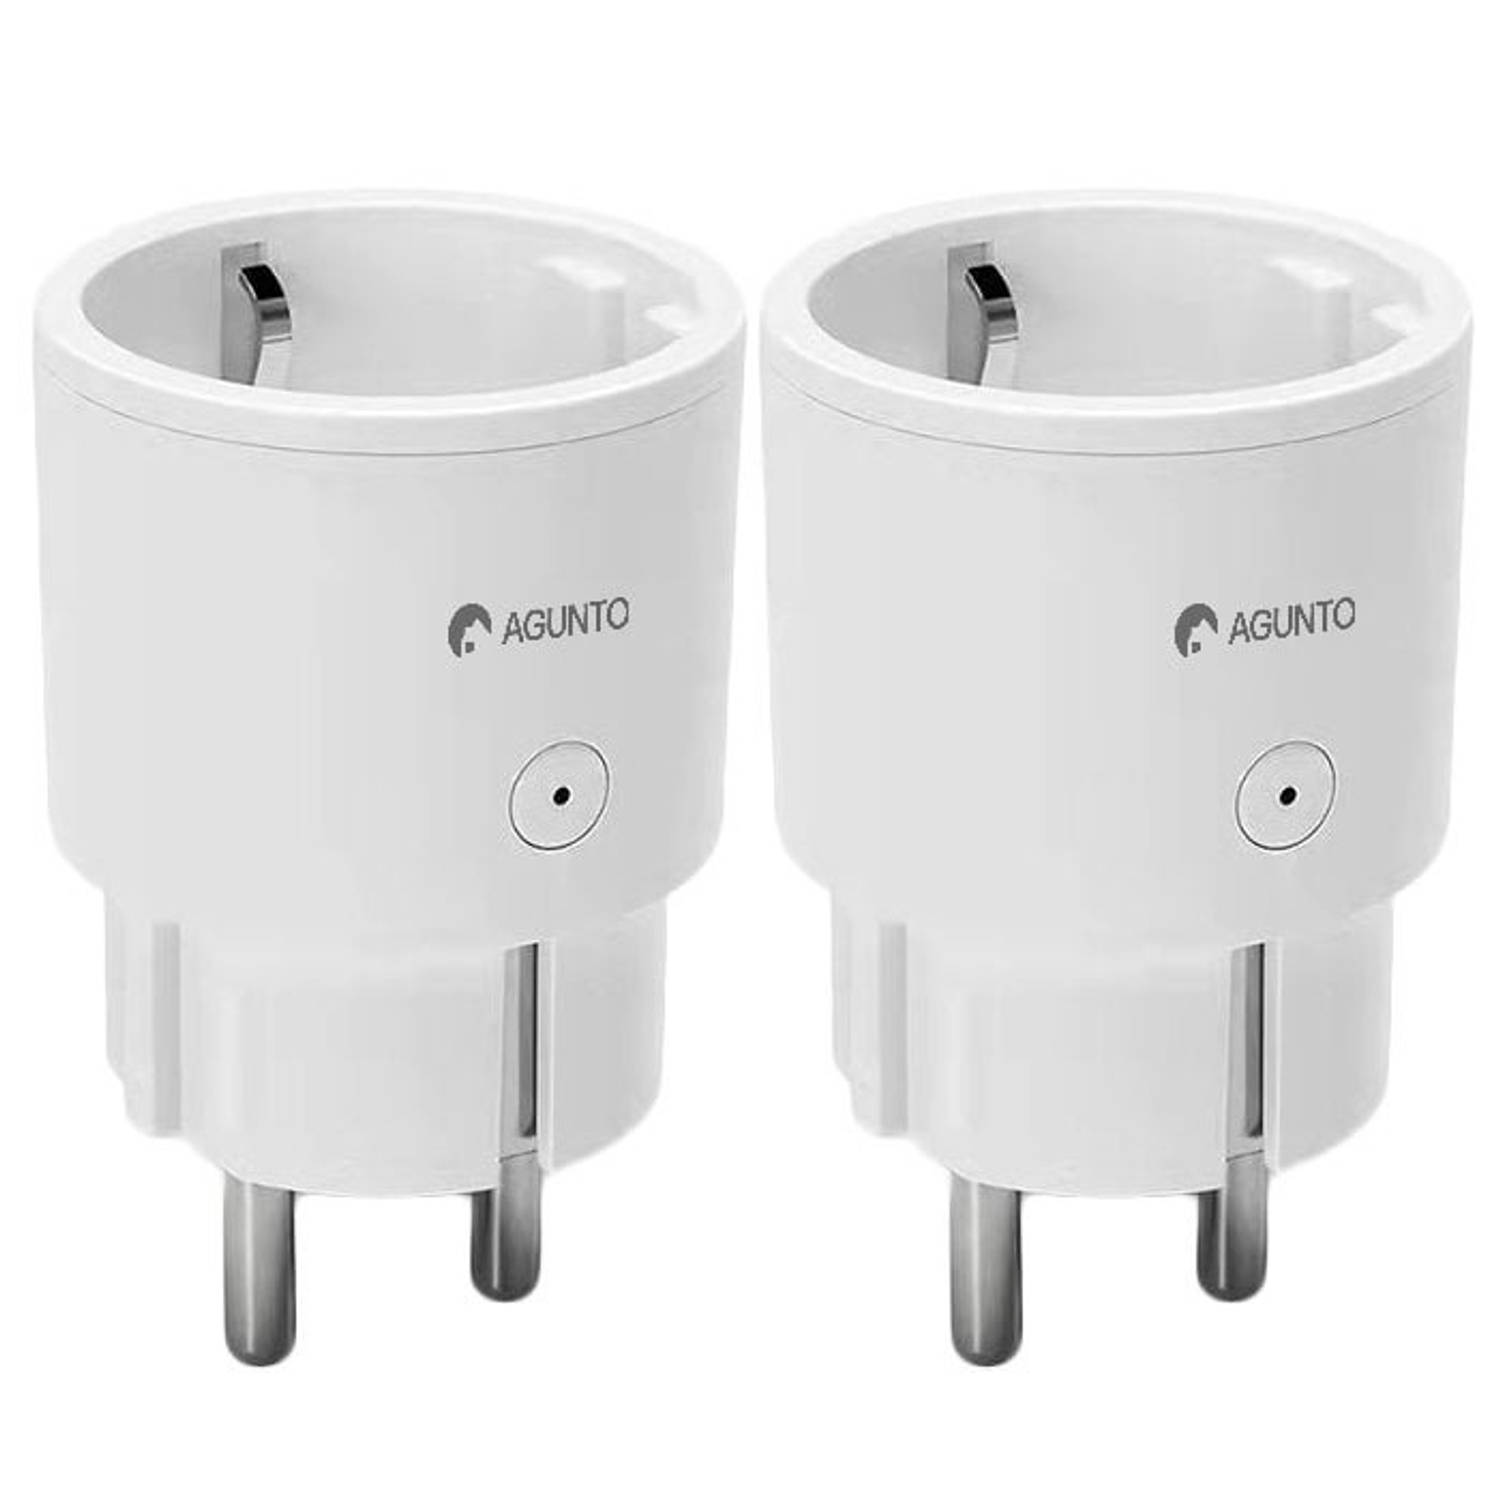 Agunto AGU-SP1 Slimme Stekker 2 Stuks - Smart Plug - Tijdschakelaar - Energiemeter - Google Home